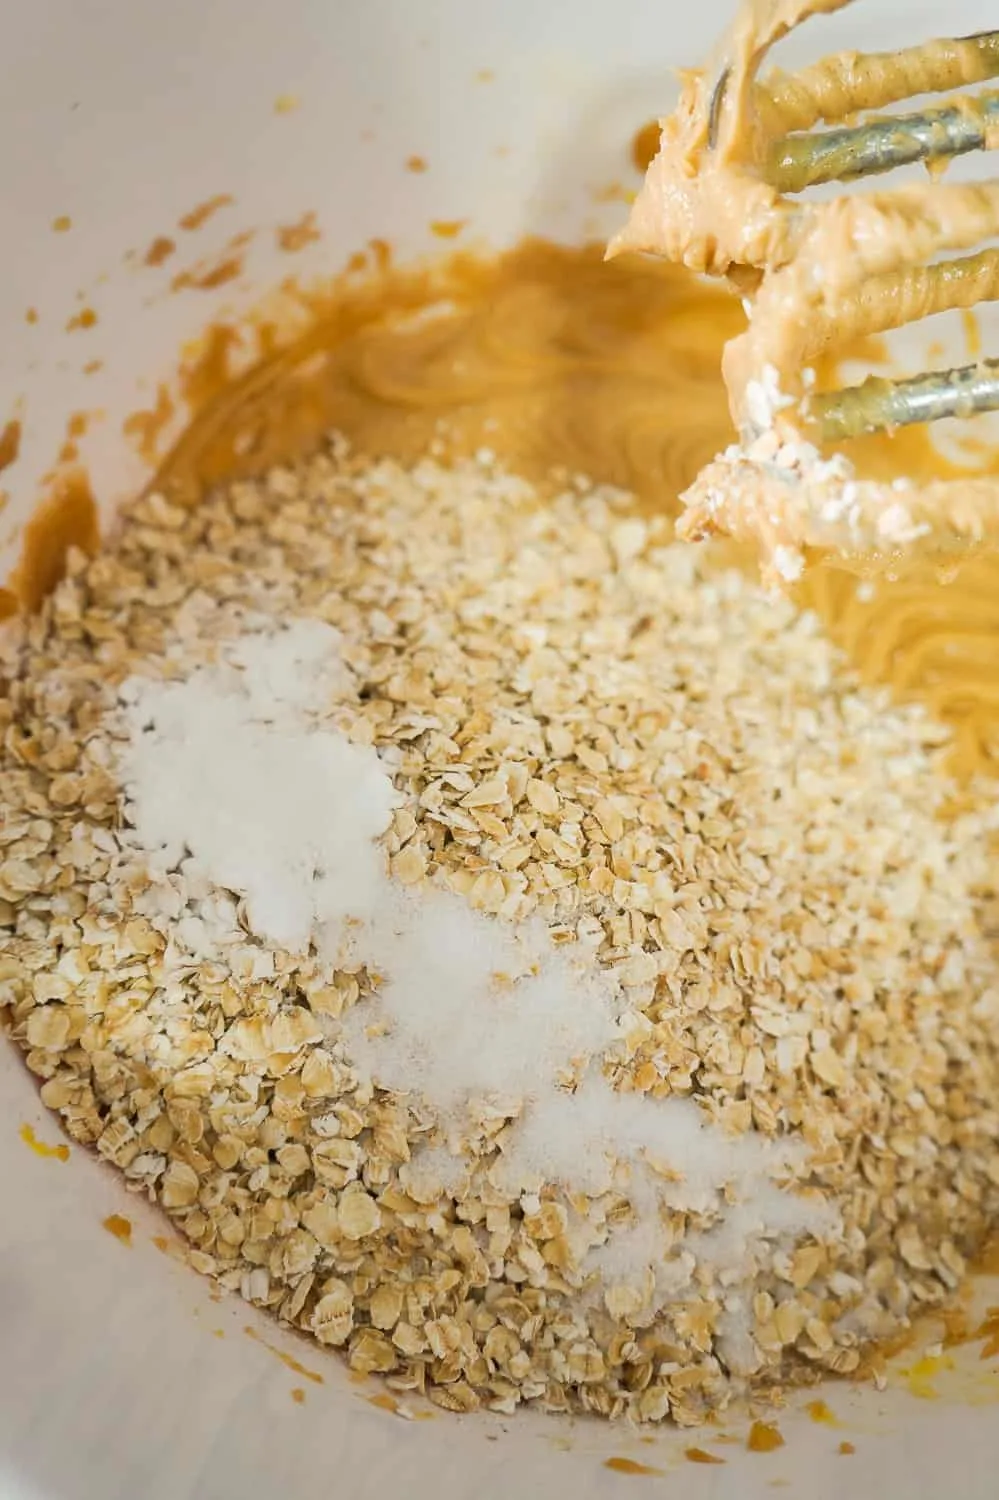 quick oats, baking powder and salt added to peanut butter mixture